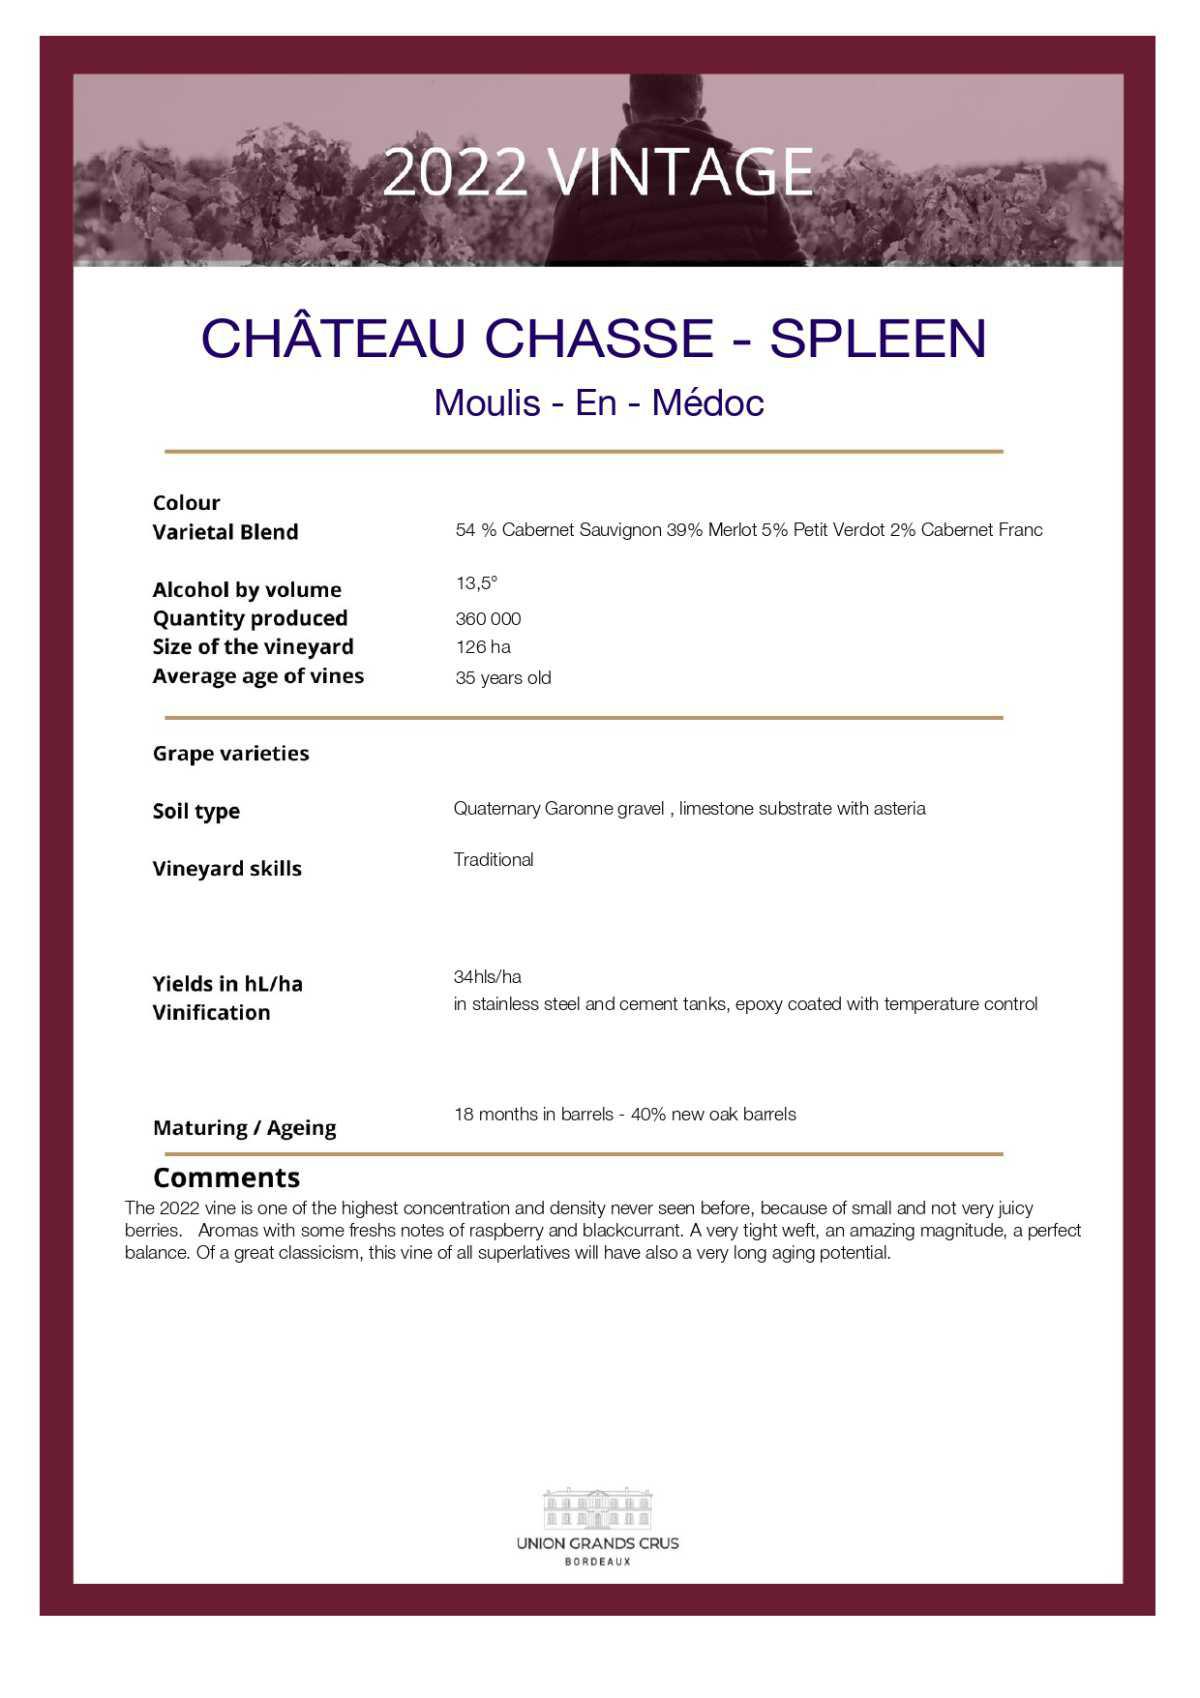  Château Chasse - Spleen